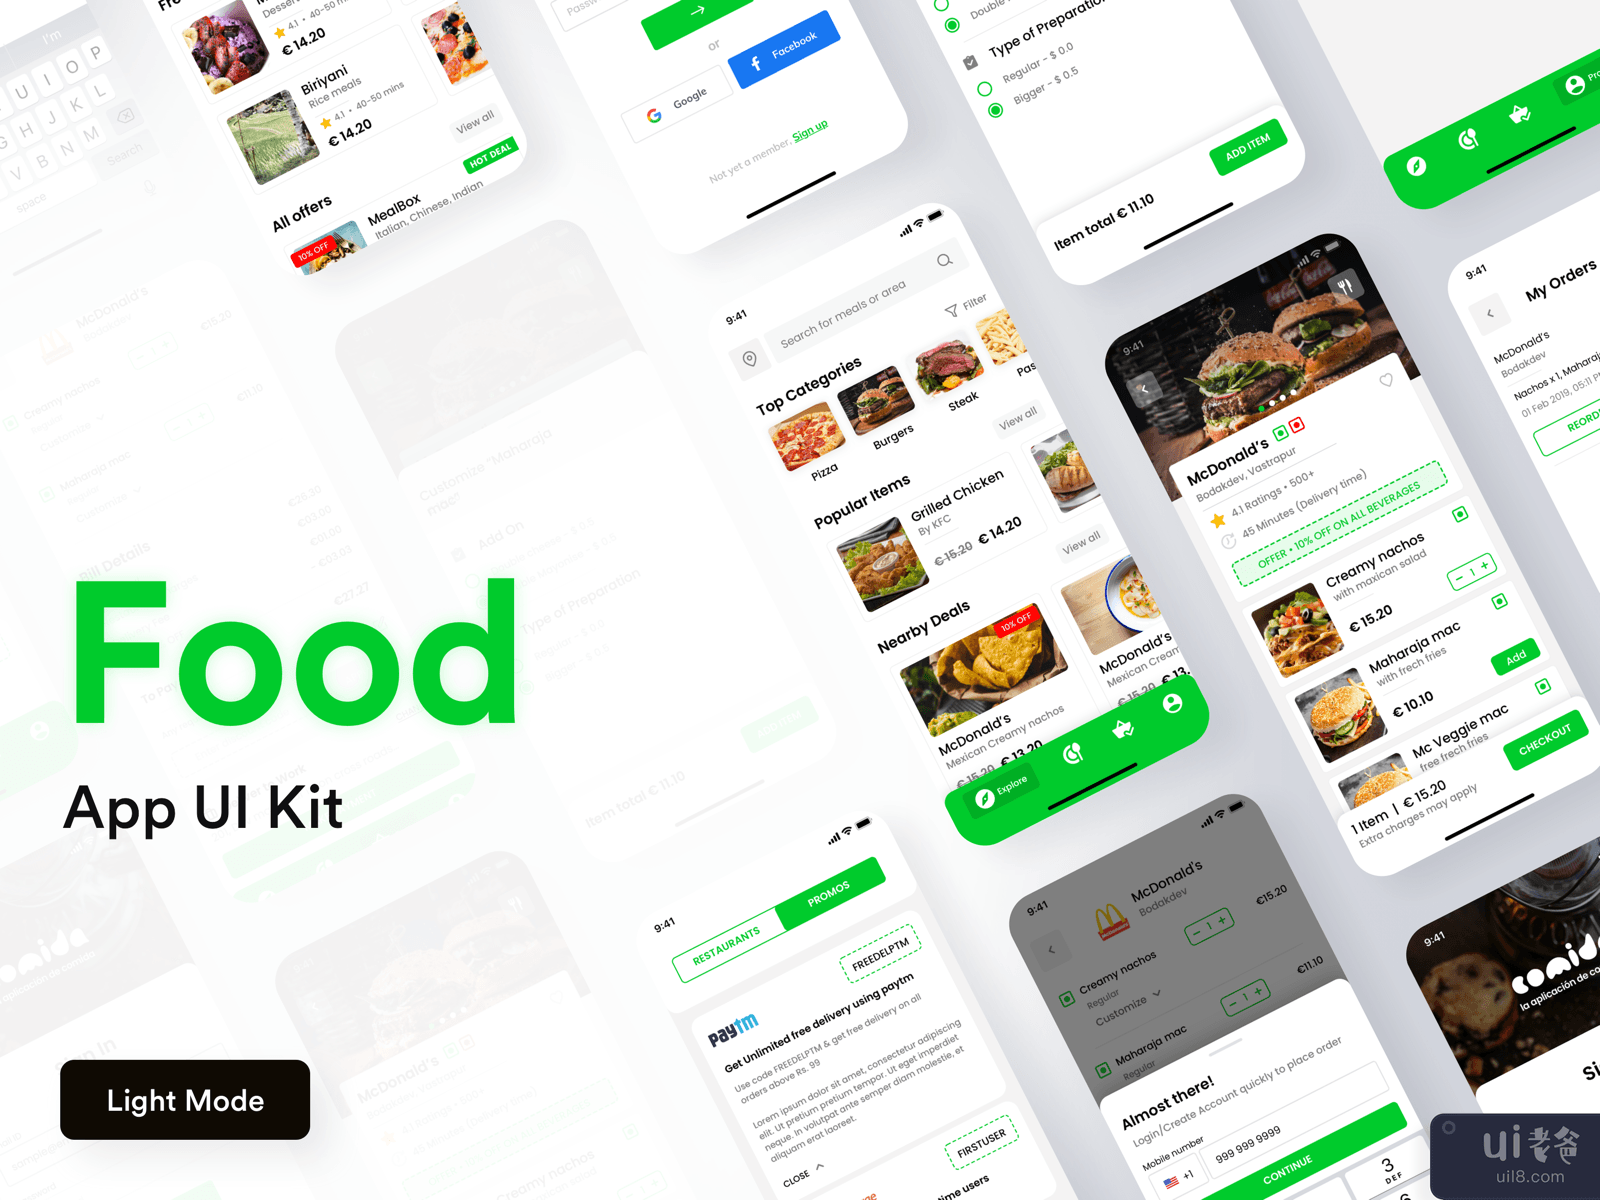 Food Ordering Mobile UI Kit - Light